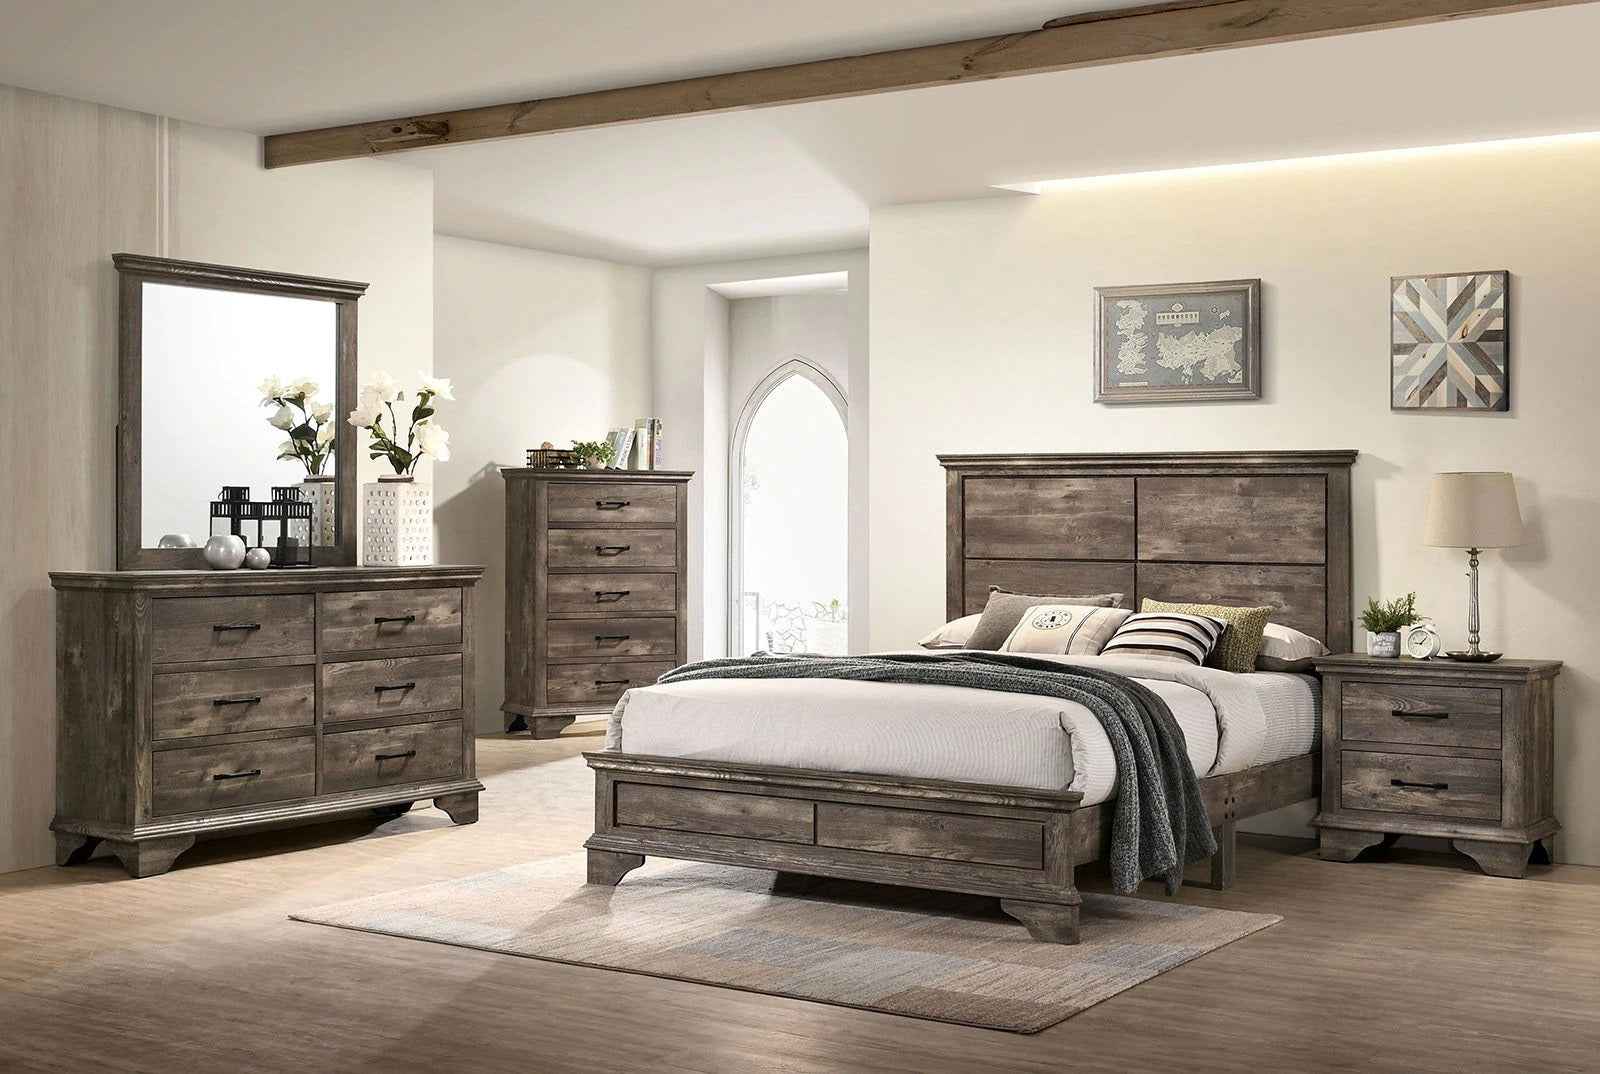 Solid Wood Veneer Matte Black Bar Pulls Replicated Wood Grain Bedroom